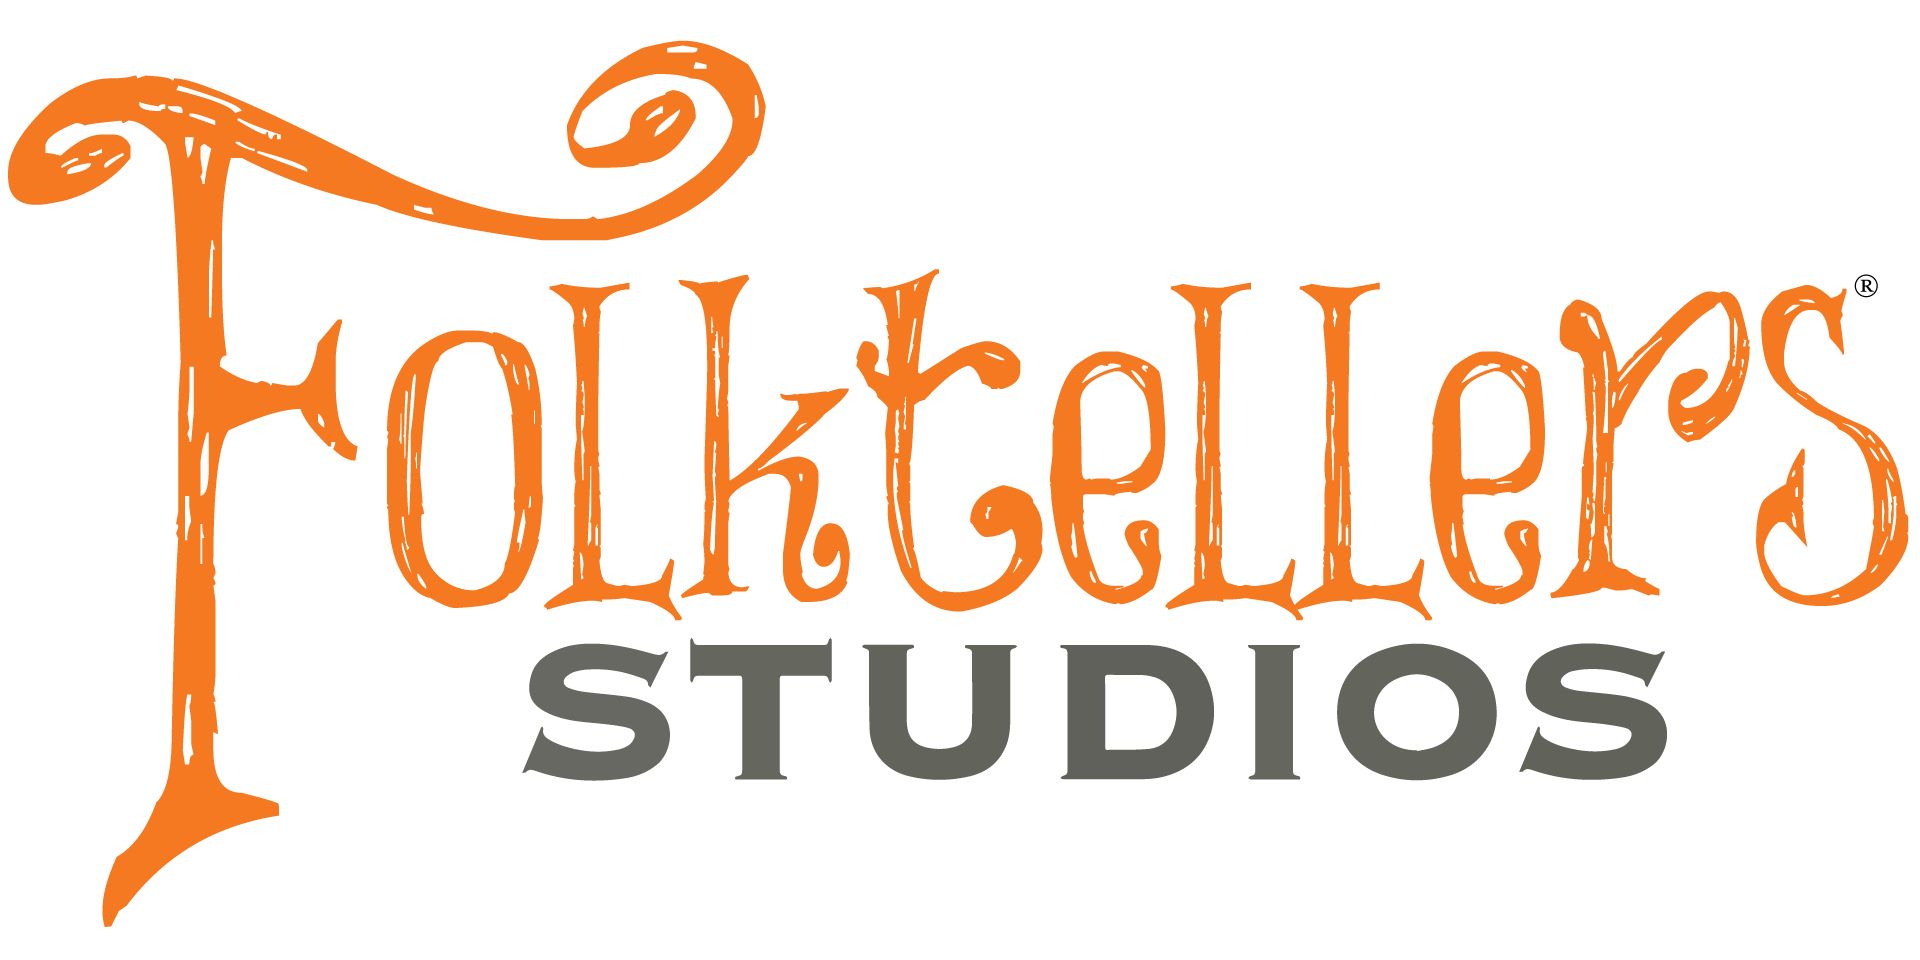 Folktellers-Studios-Logo-1920x960.png 1920x960